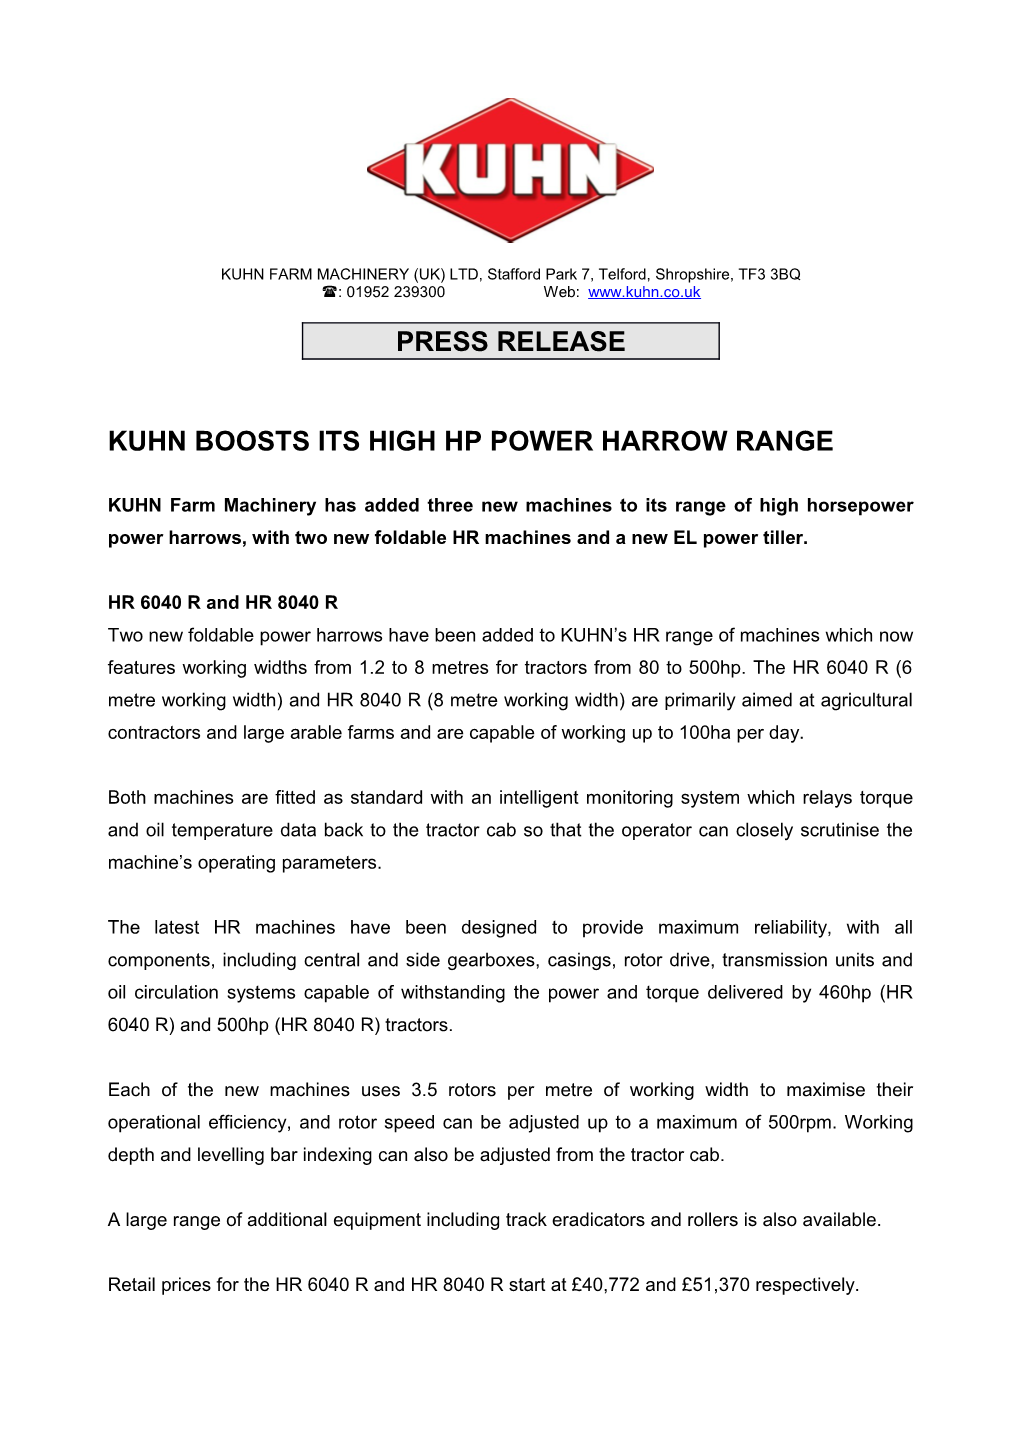 Kuhn Boosts Its High Hp Power Harrow Range